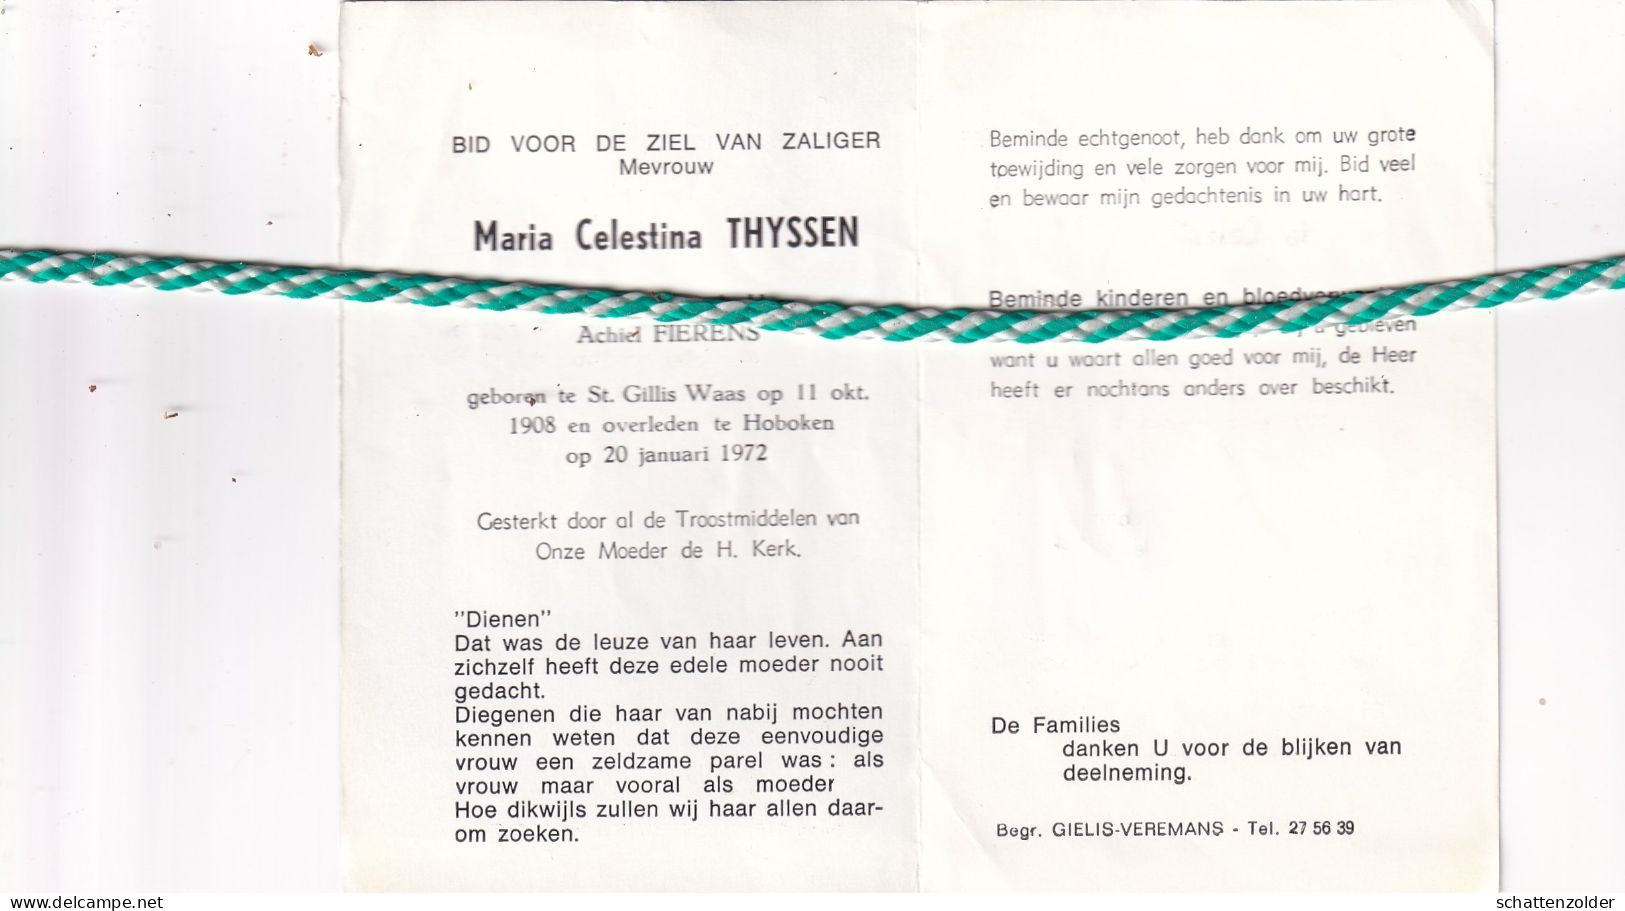 Maria Celestina Thyssen-Fierens, Sint-Gillis-Waas 1908, Hoboken 1972 - Obituary Notices